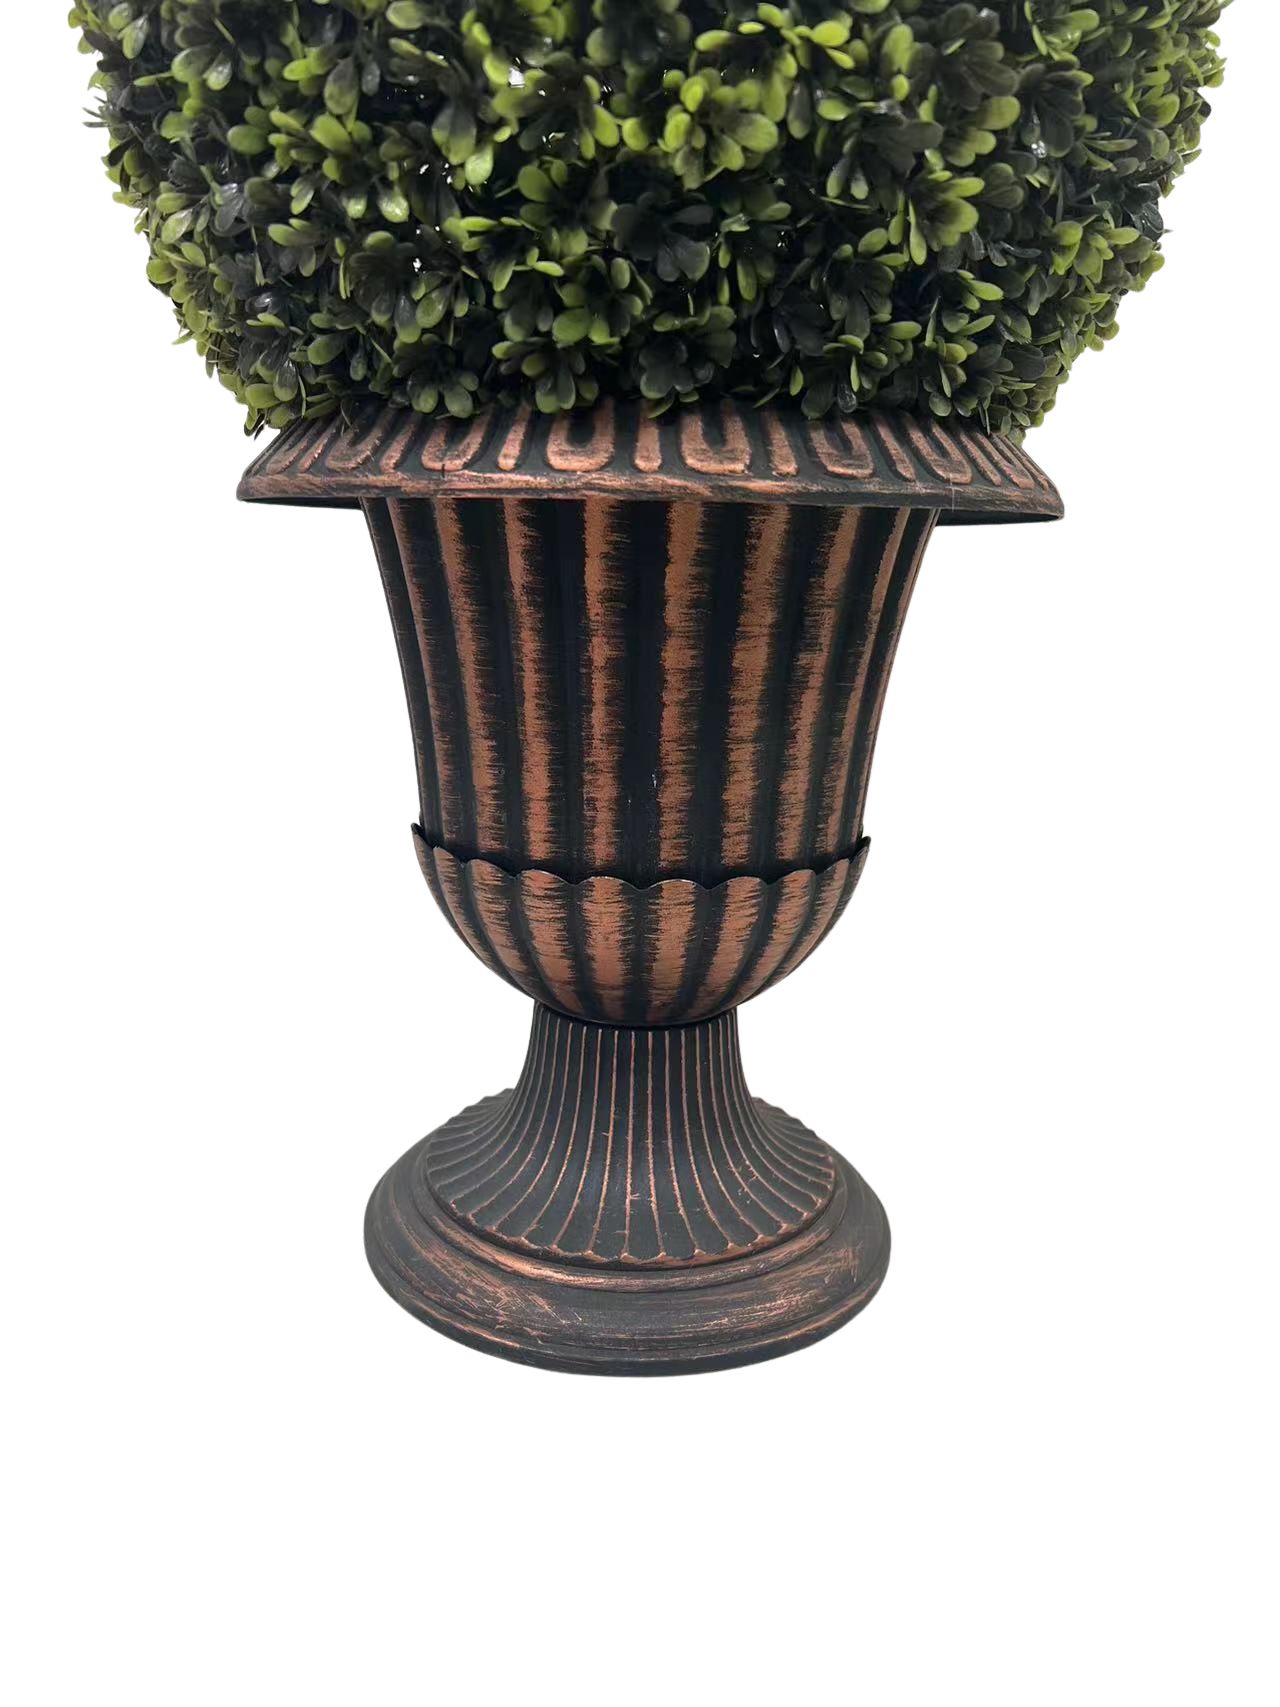 24" Ball Topiary in Bronze Pedestal Pot,